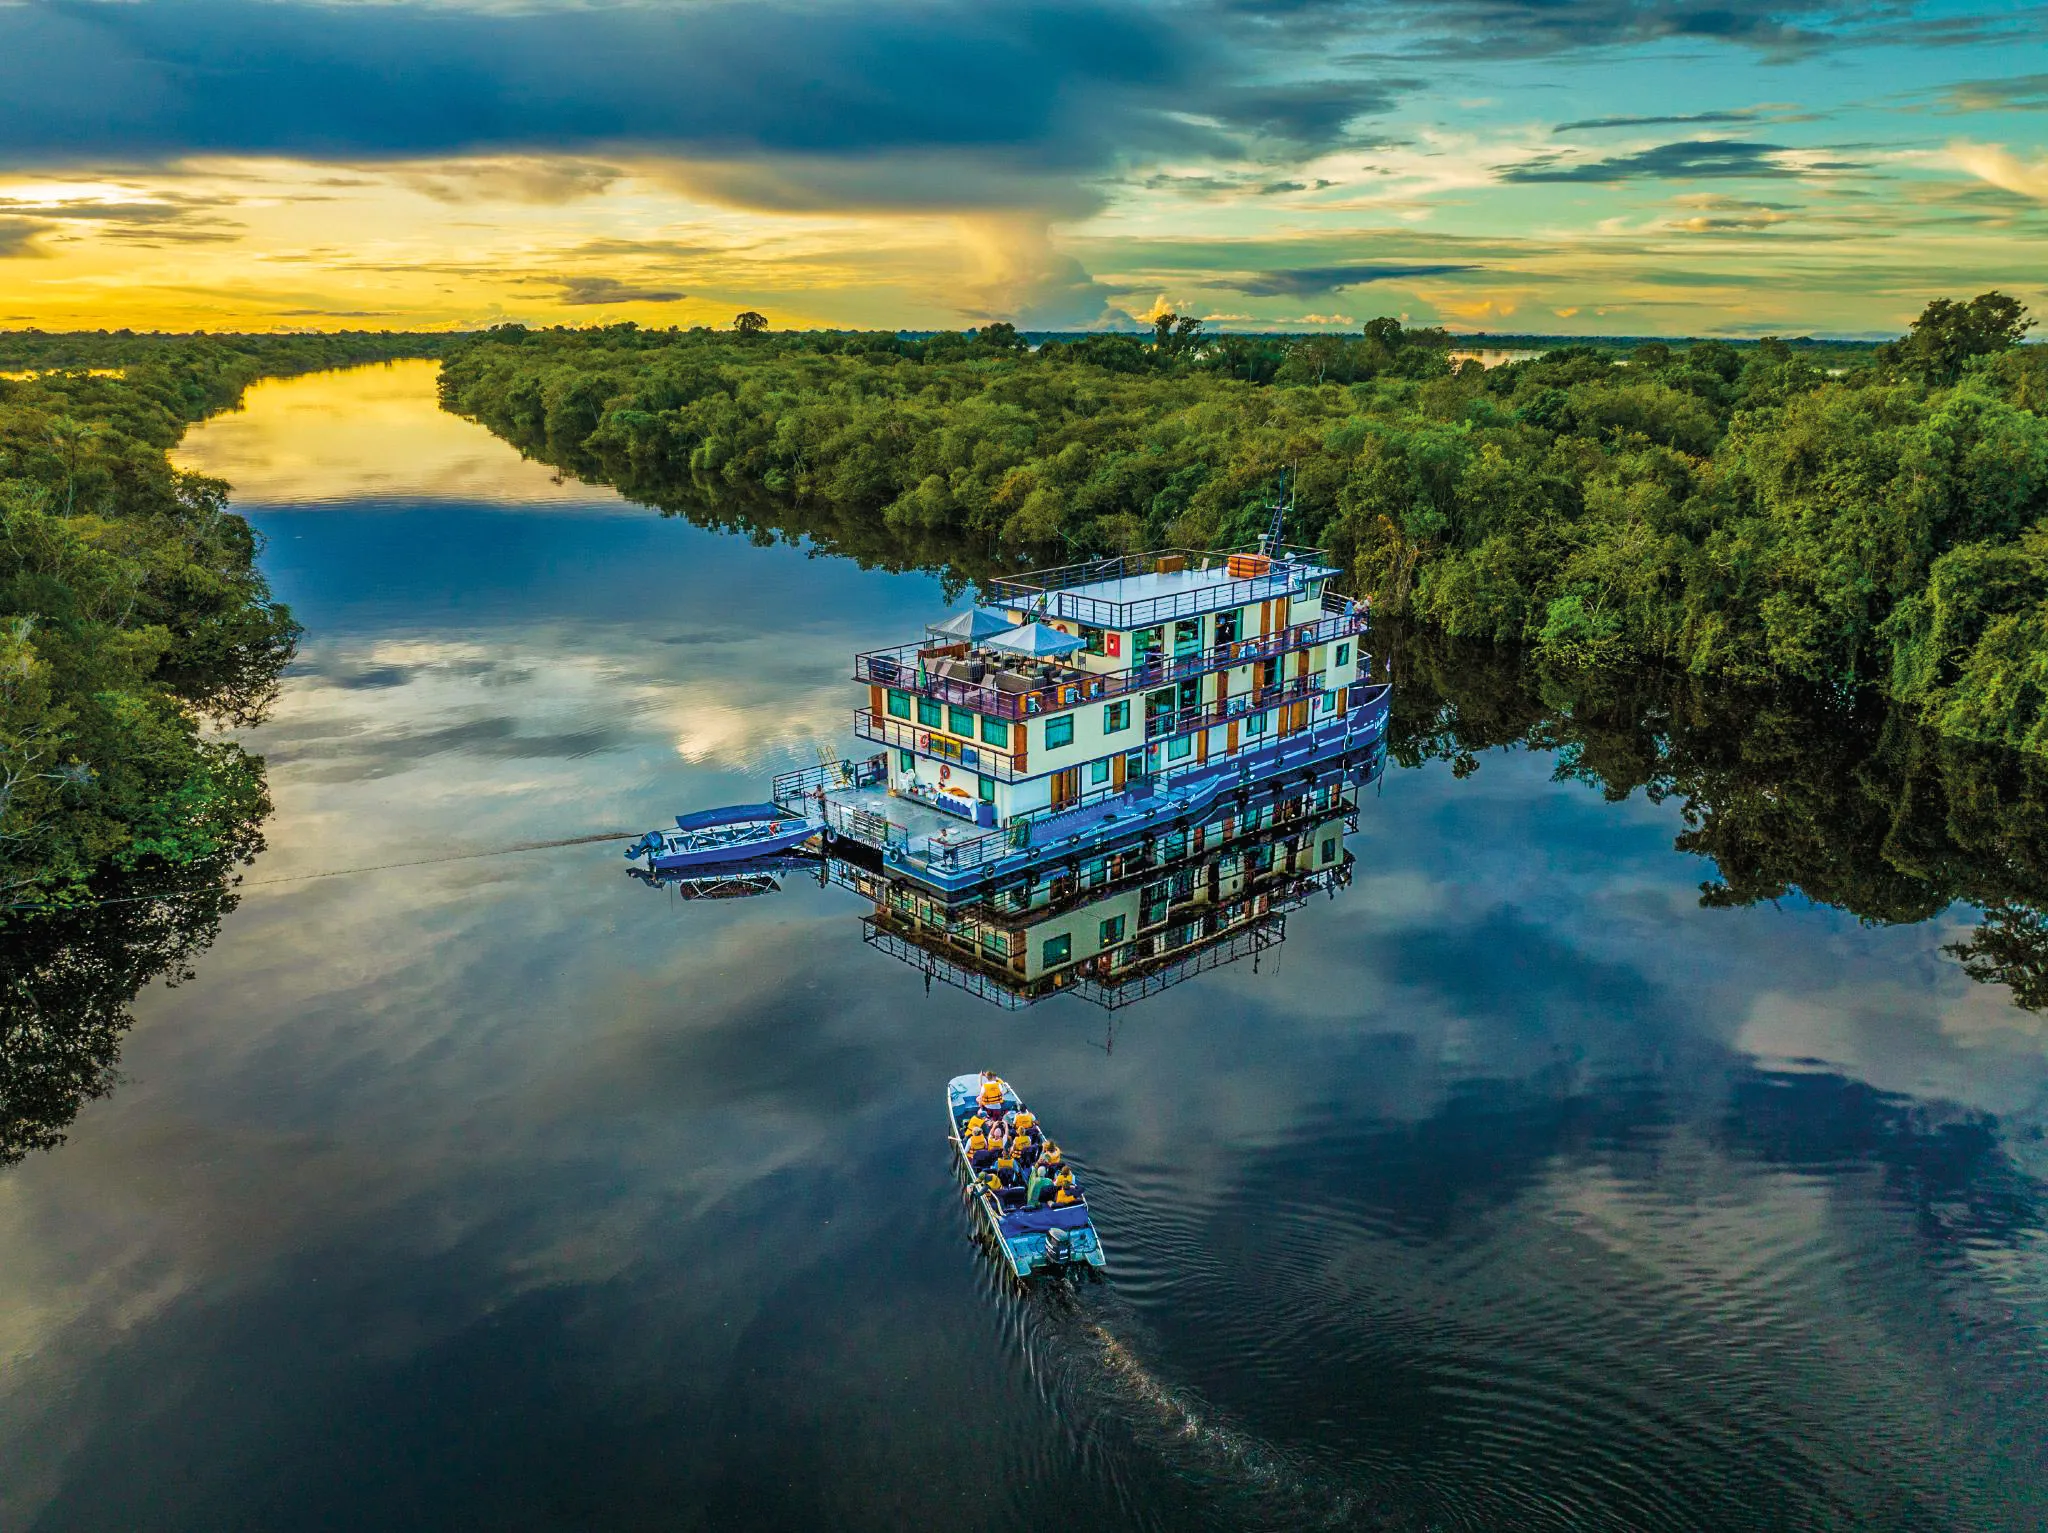 La Jangada explorant l'Amazonie  